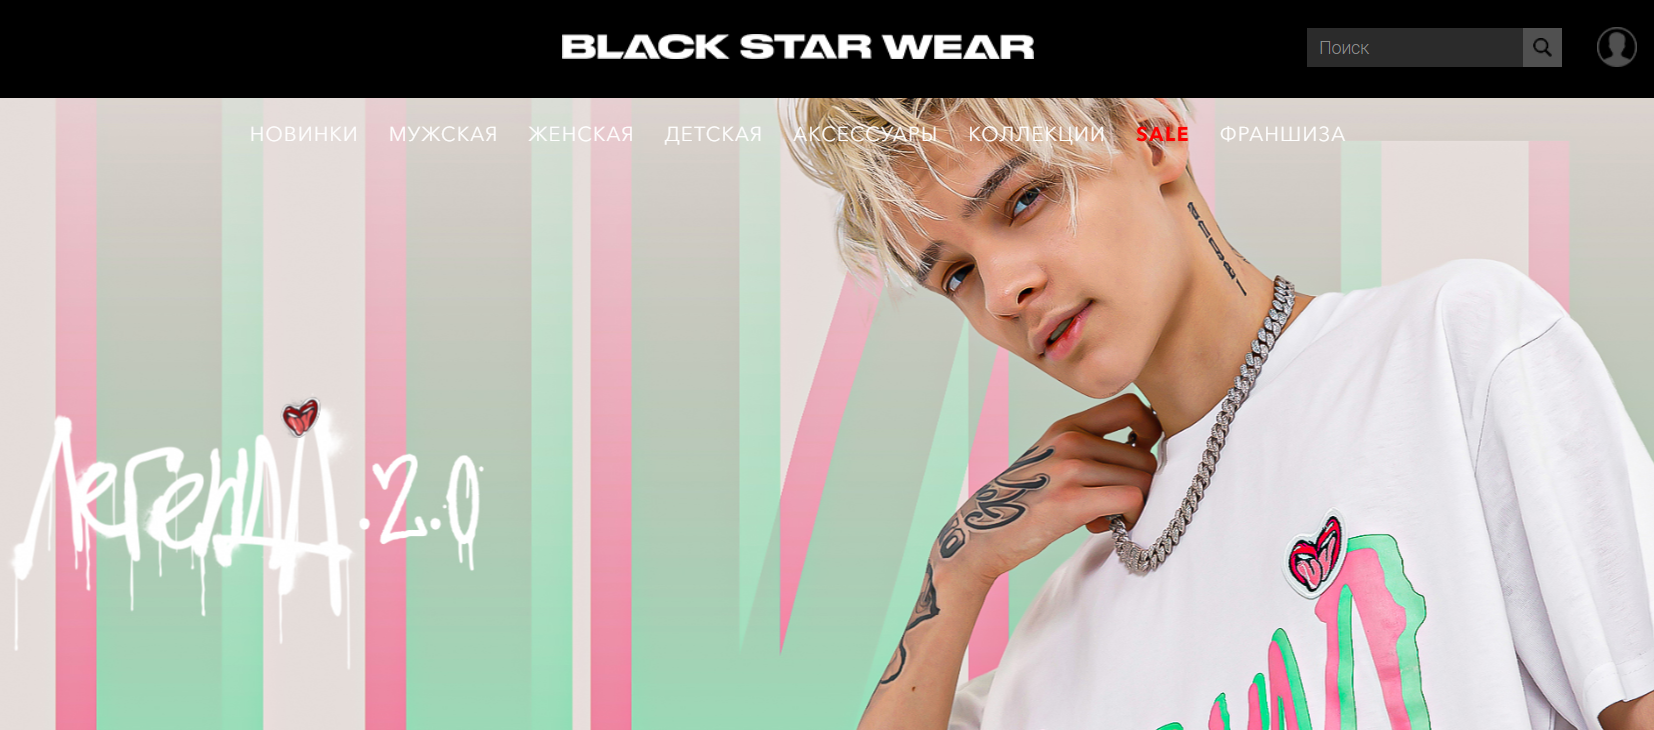 Black Star Wear официальный сайт интернет-магазина